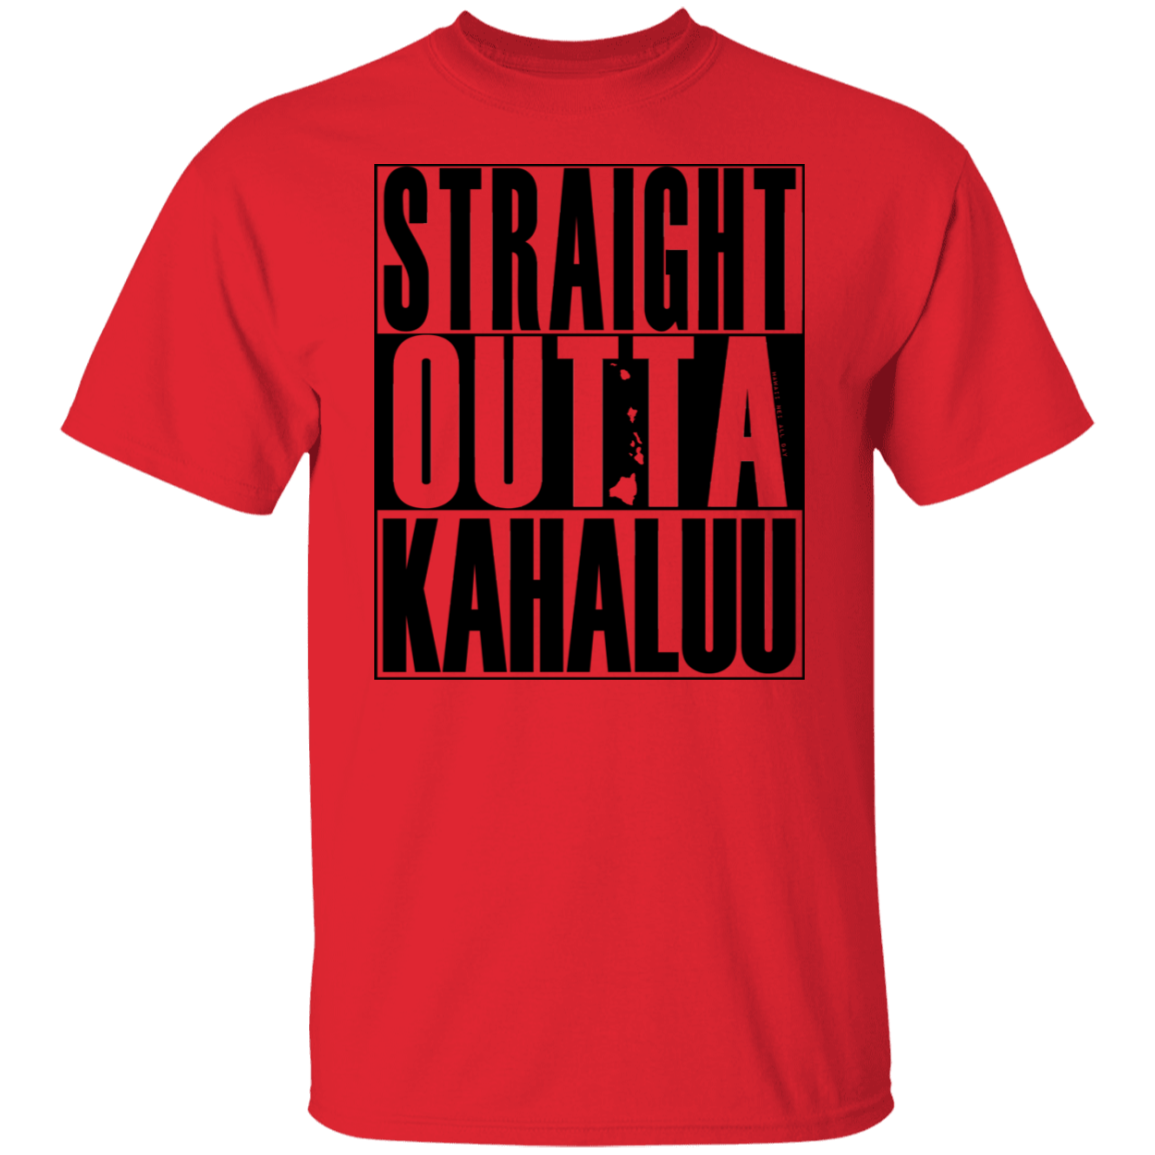 Straight Outta Kahaluu (black ink) T-Shirt